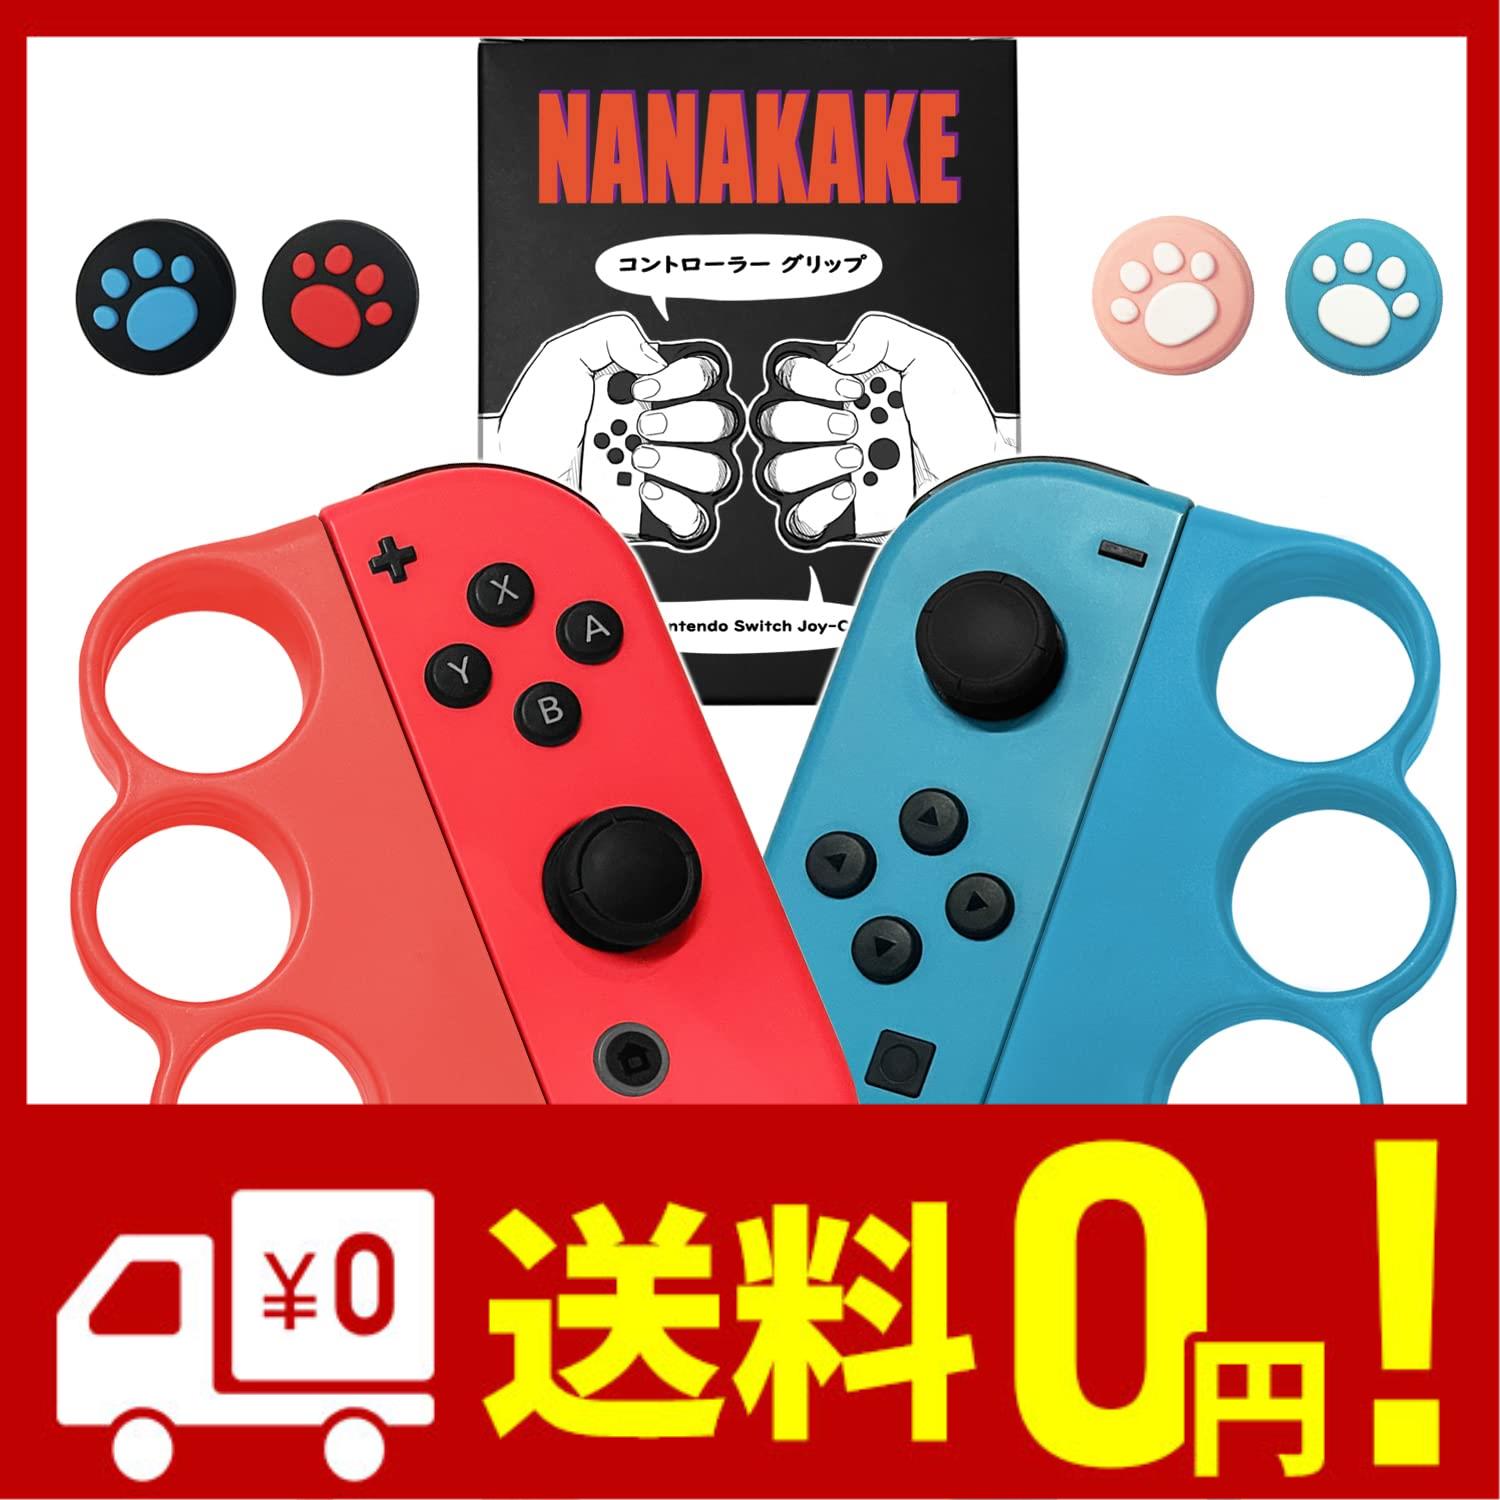 Nanakake Fit Boxing Fit Boxing 2対応 コントローラー グリップ 親指キャップ 4個入り Nintendo Switch Joy-Con用 ボクシング ゲーム グ